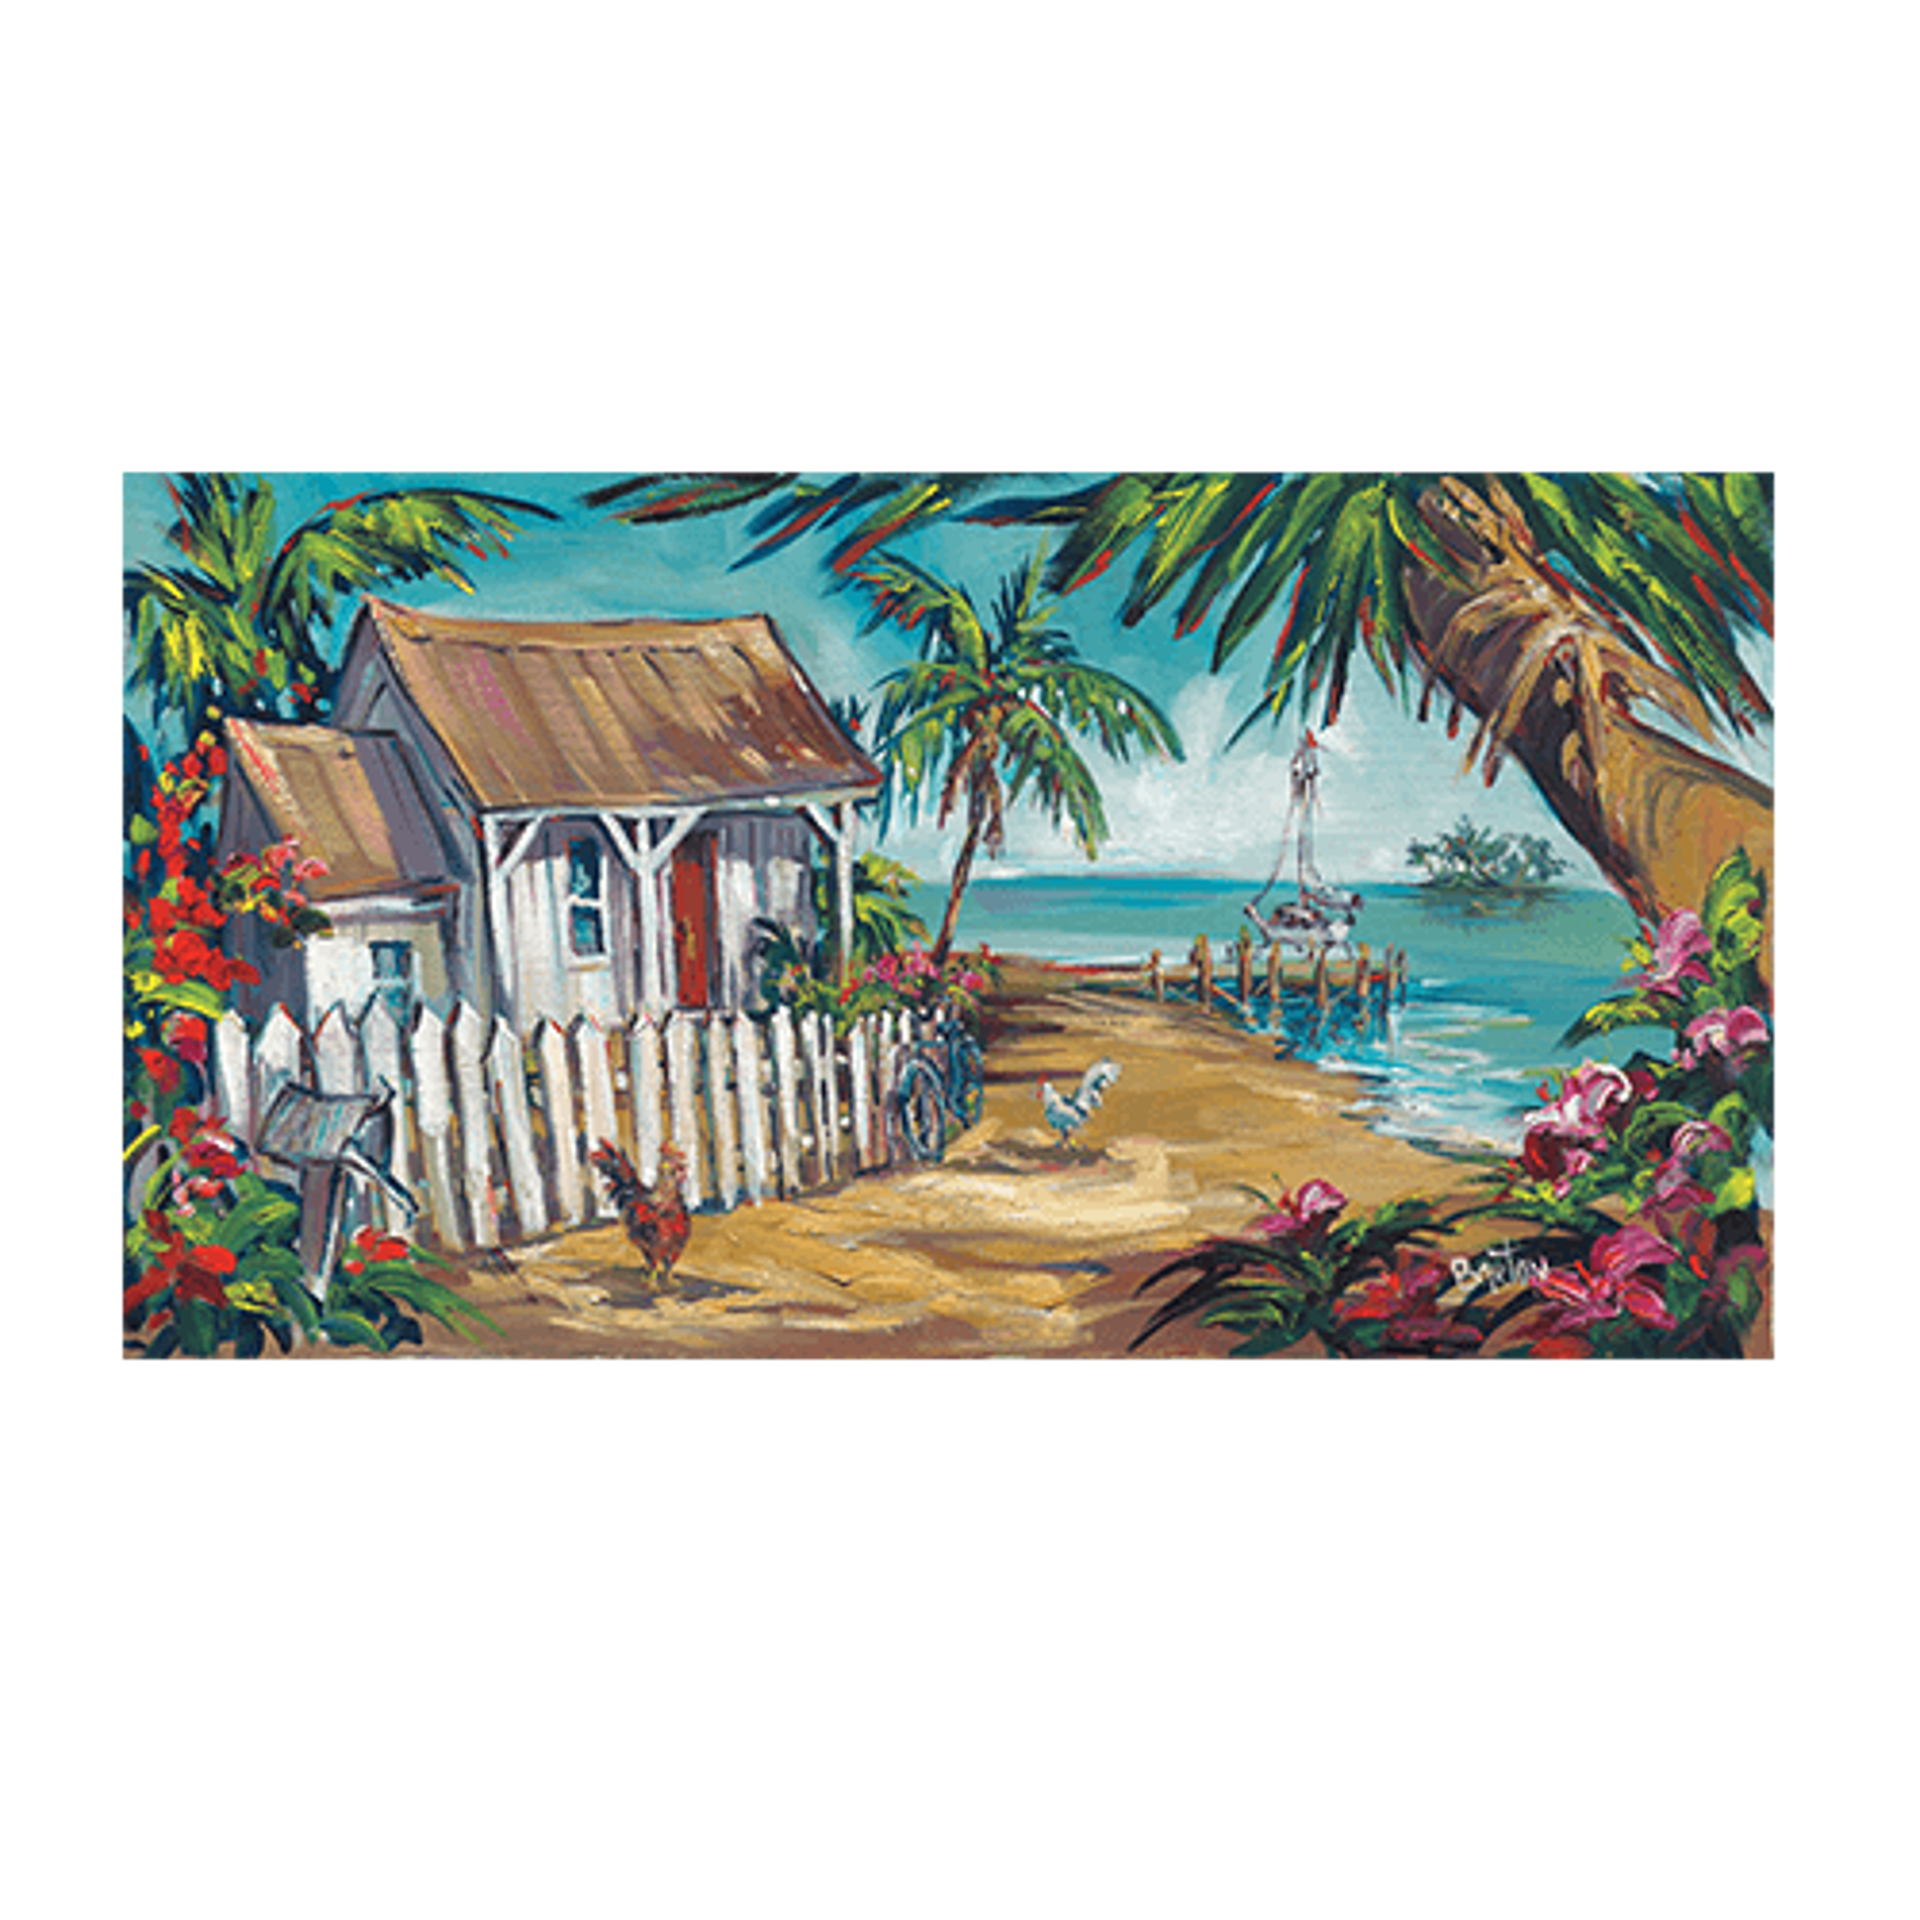 Key West Memories by Steve Barton